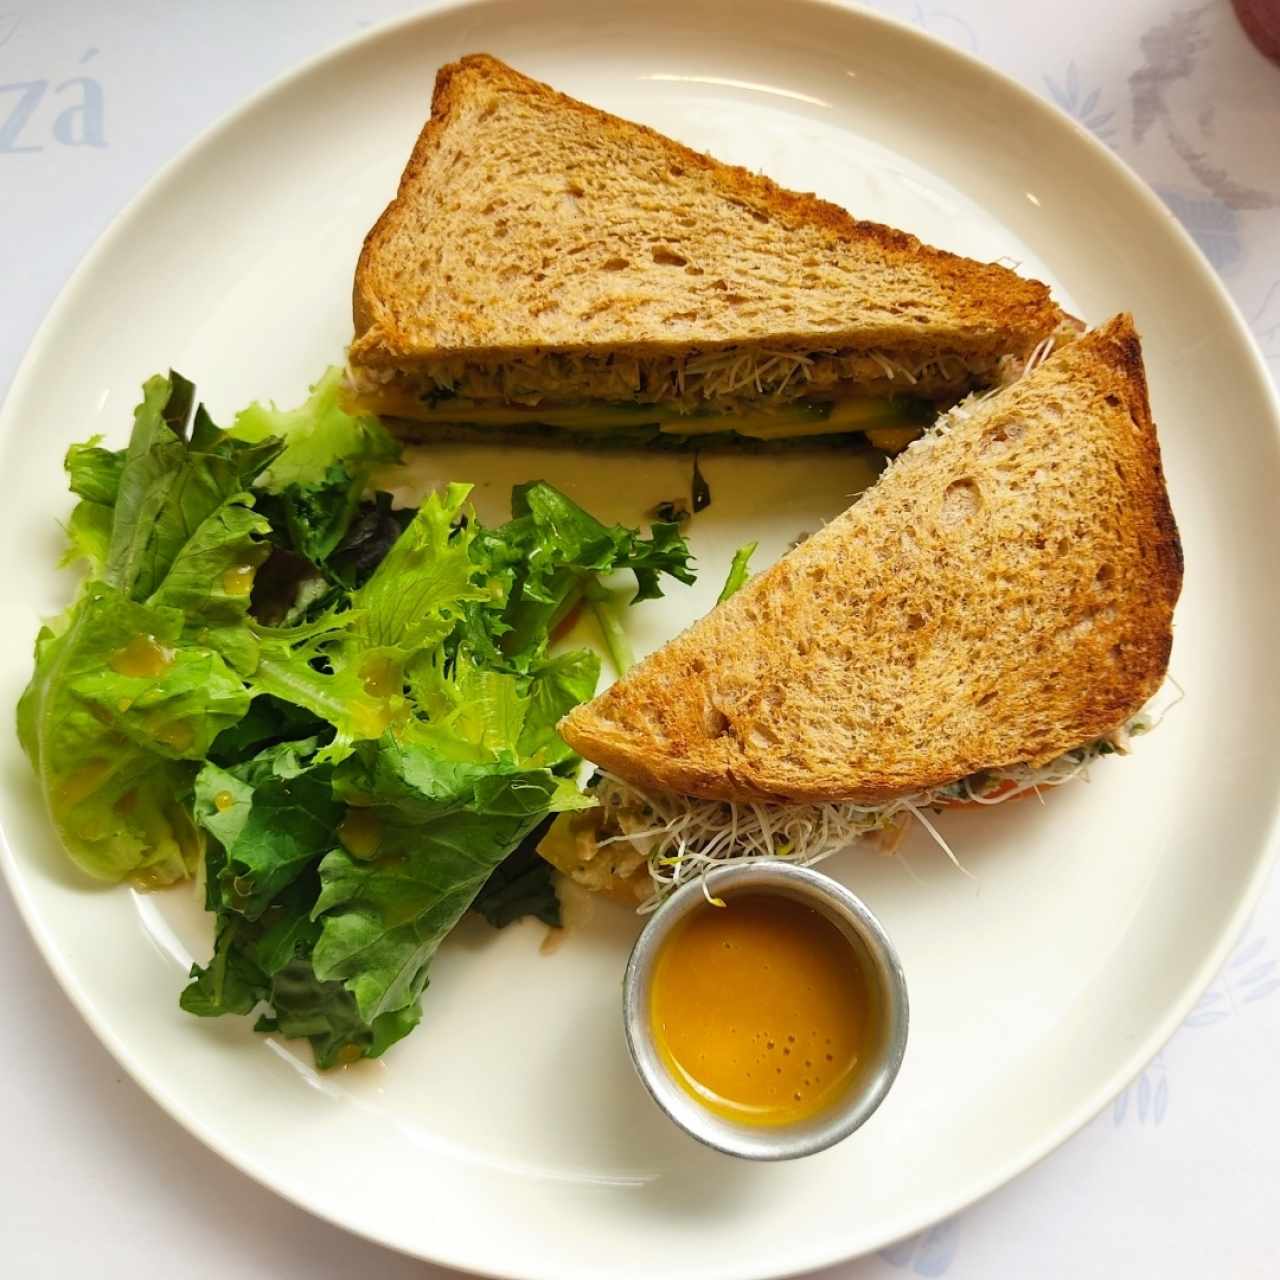 Mayo-Less Tuna Sandwich
